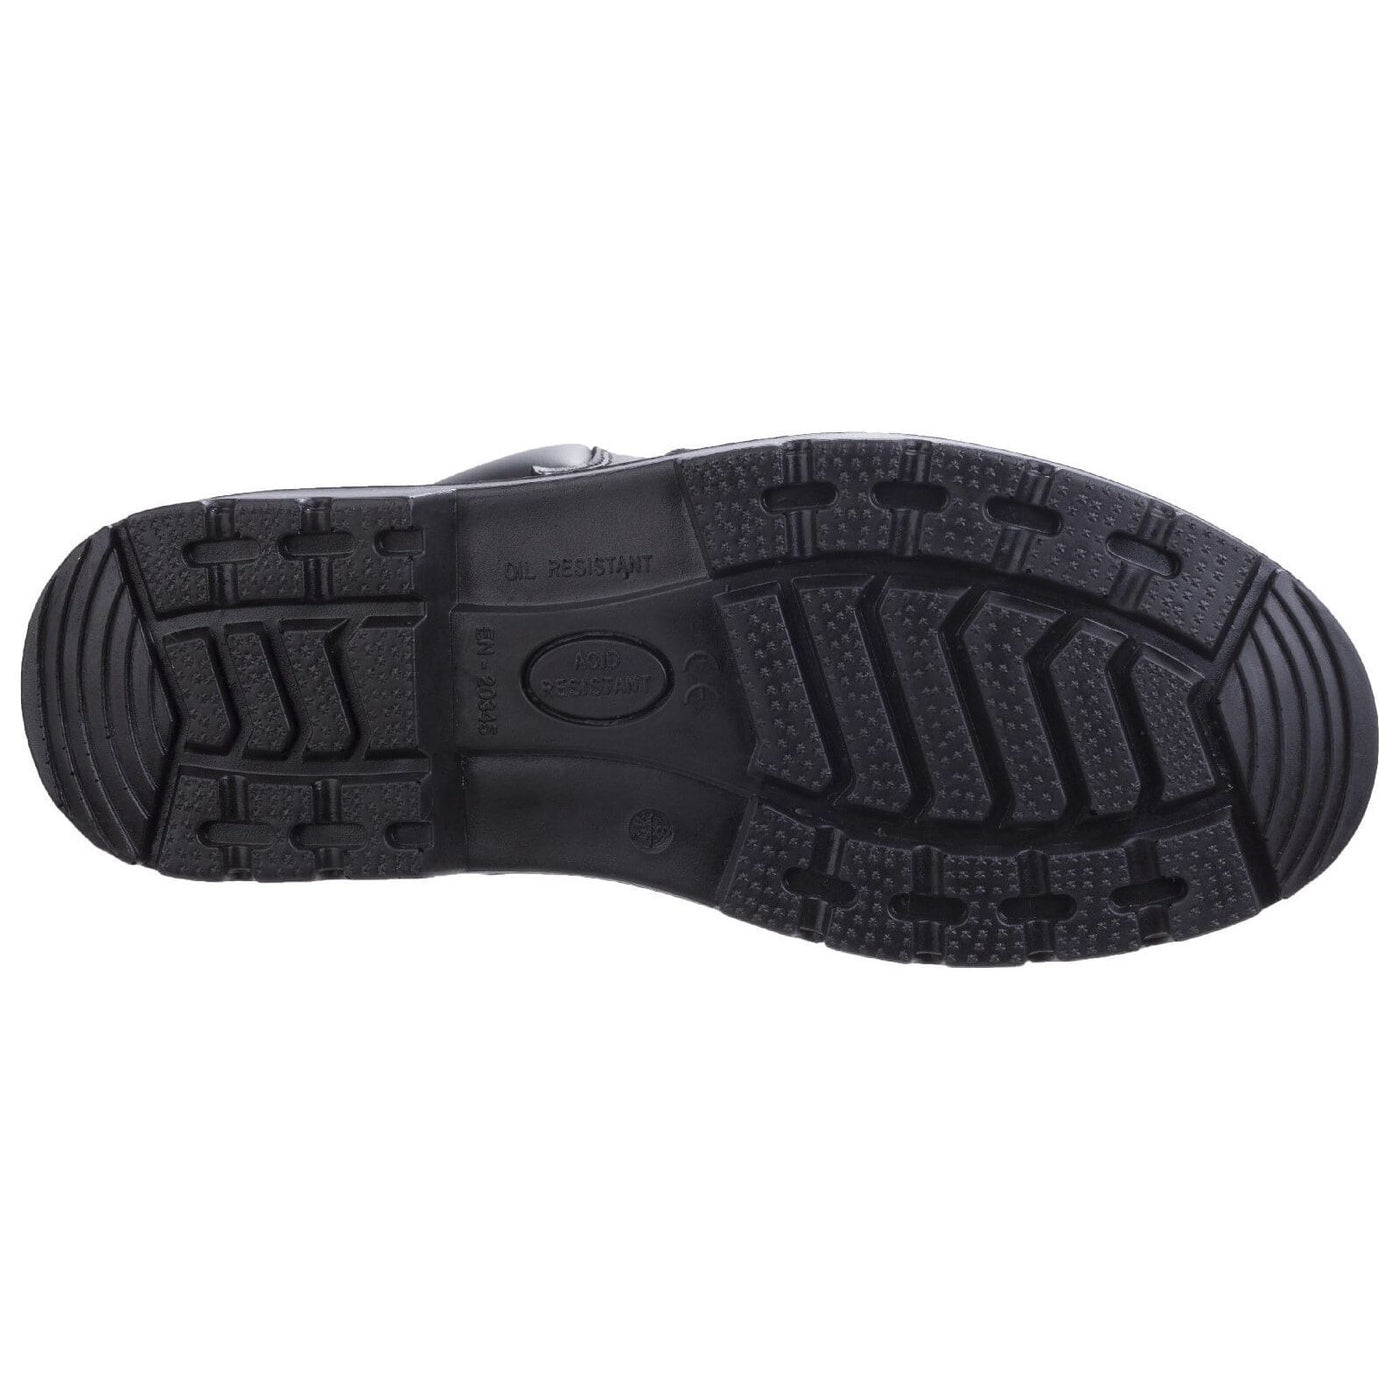 Centek FS331 S3 Black Safety Boots-Black-3